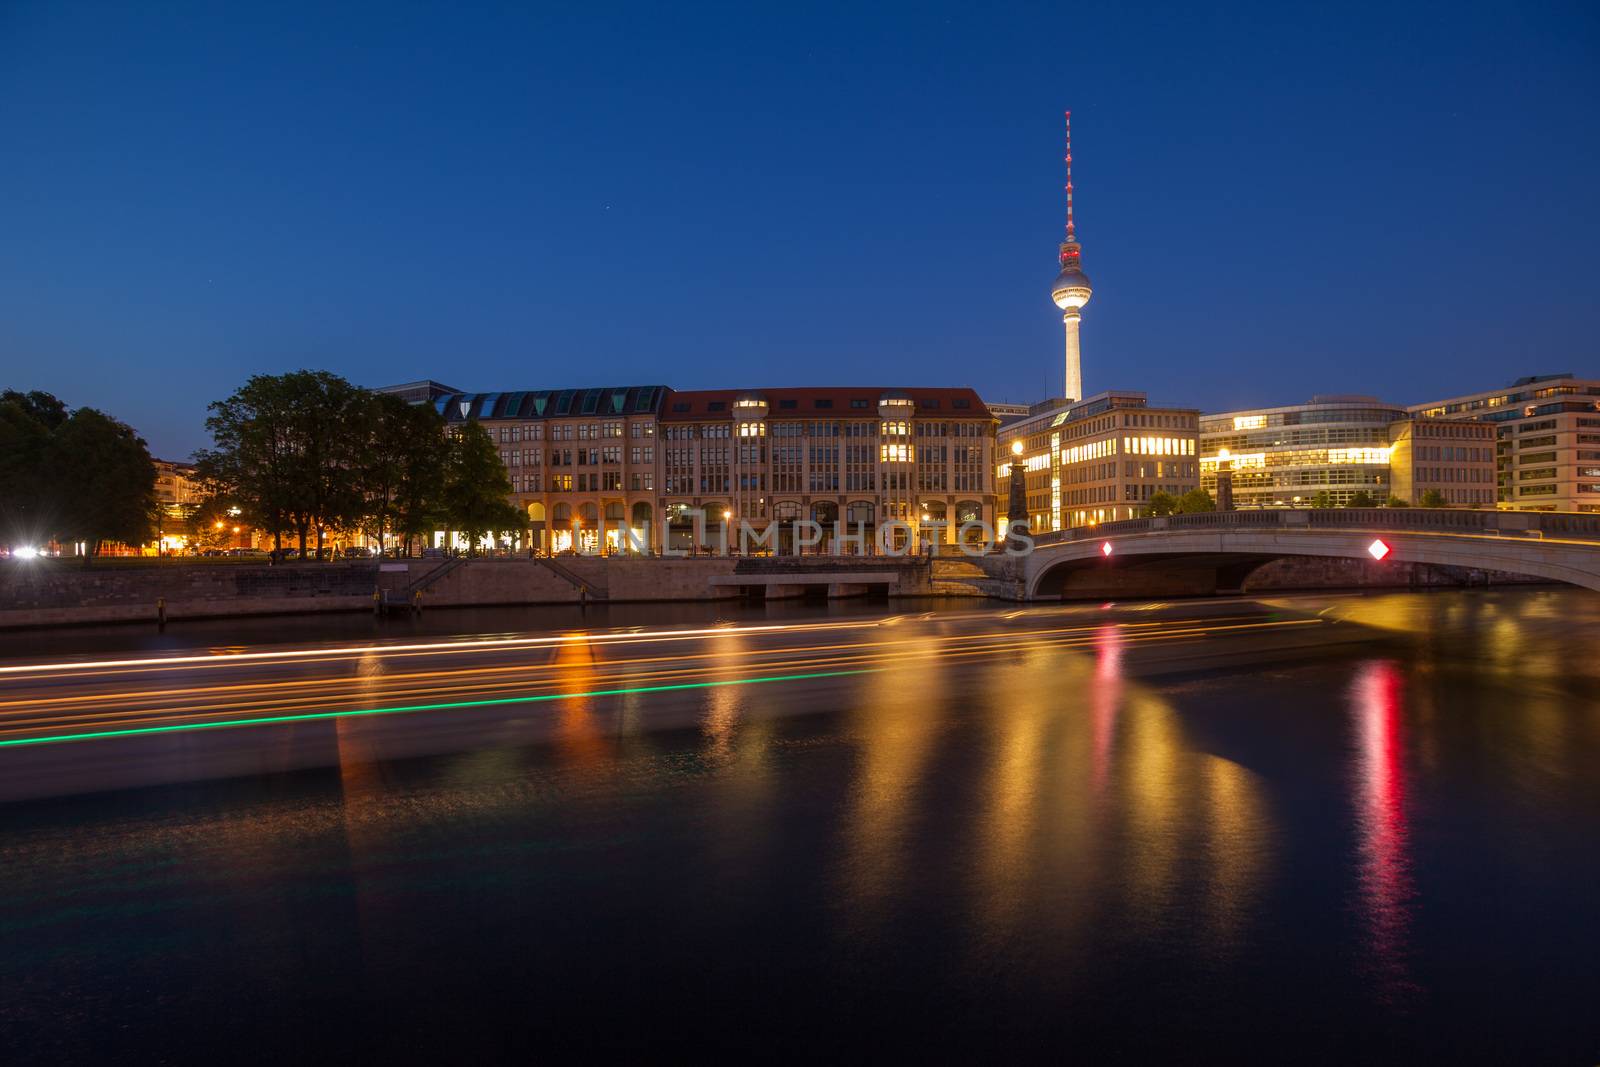 Berlin River Spree and TV Tower (Fernsehturm) by edan